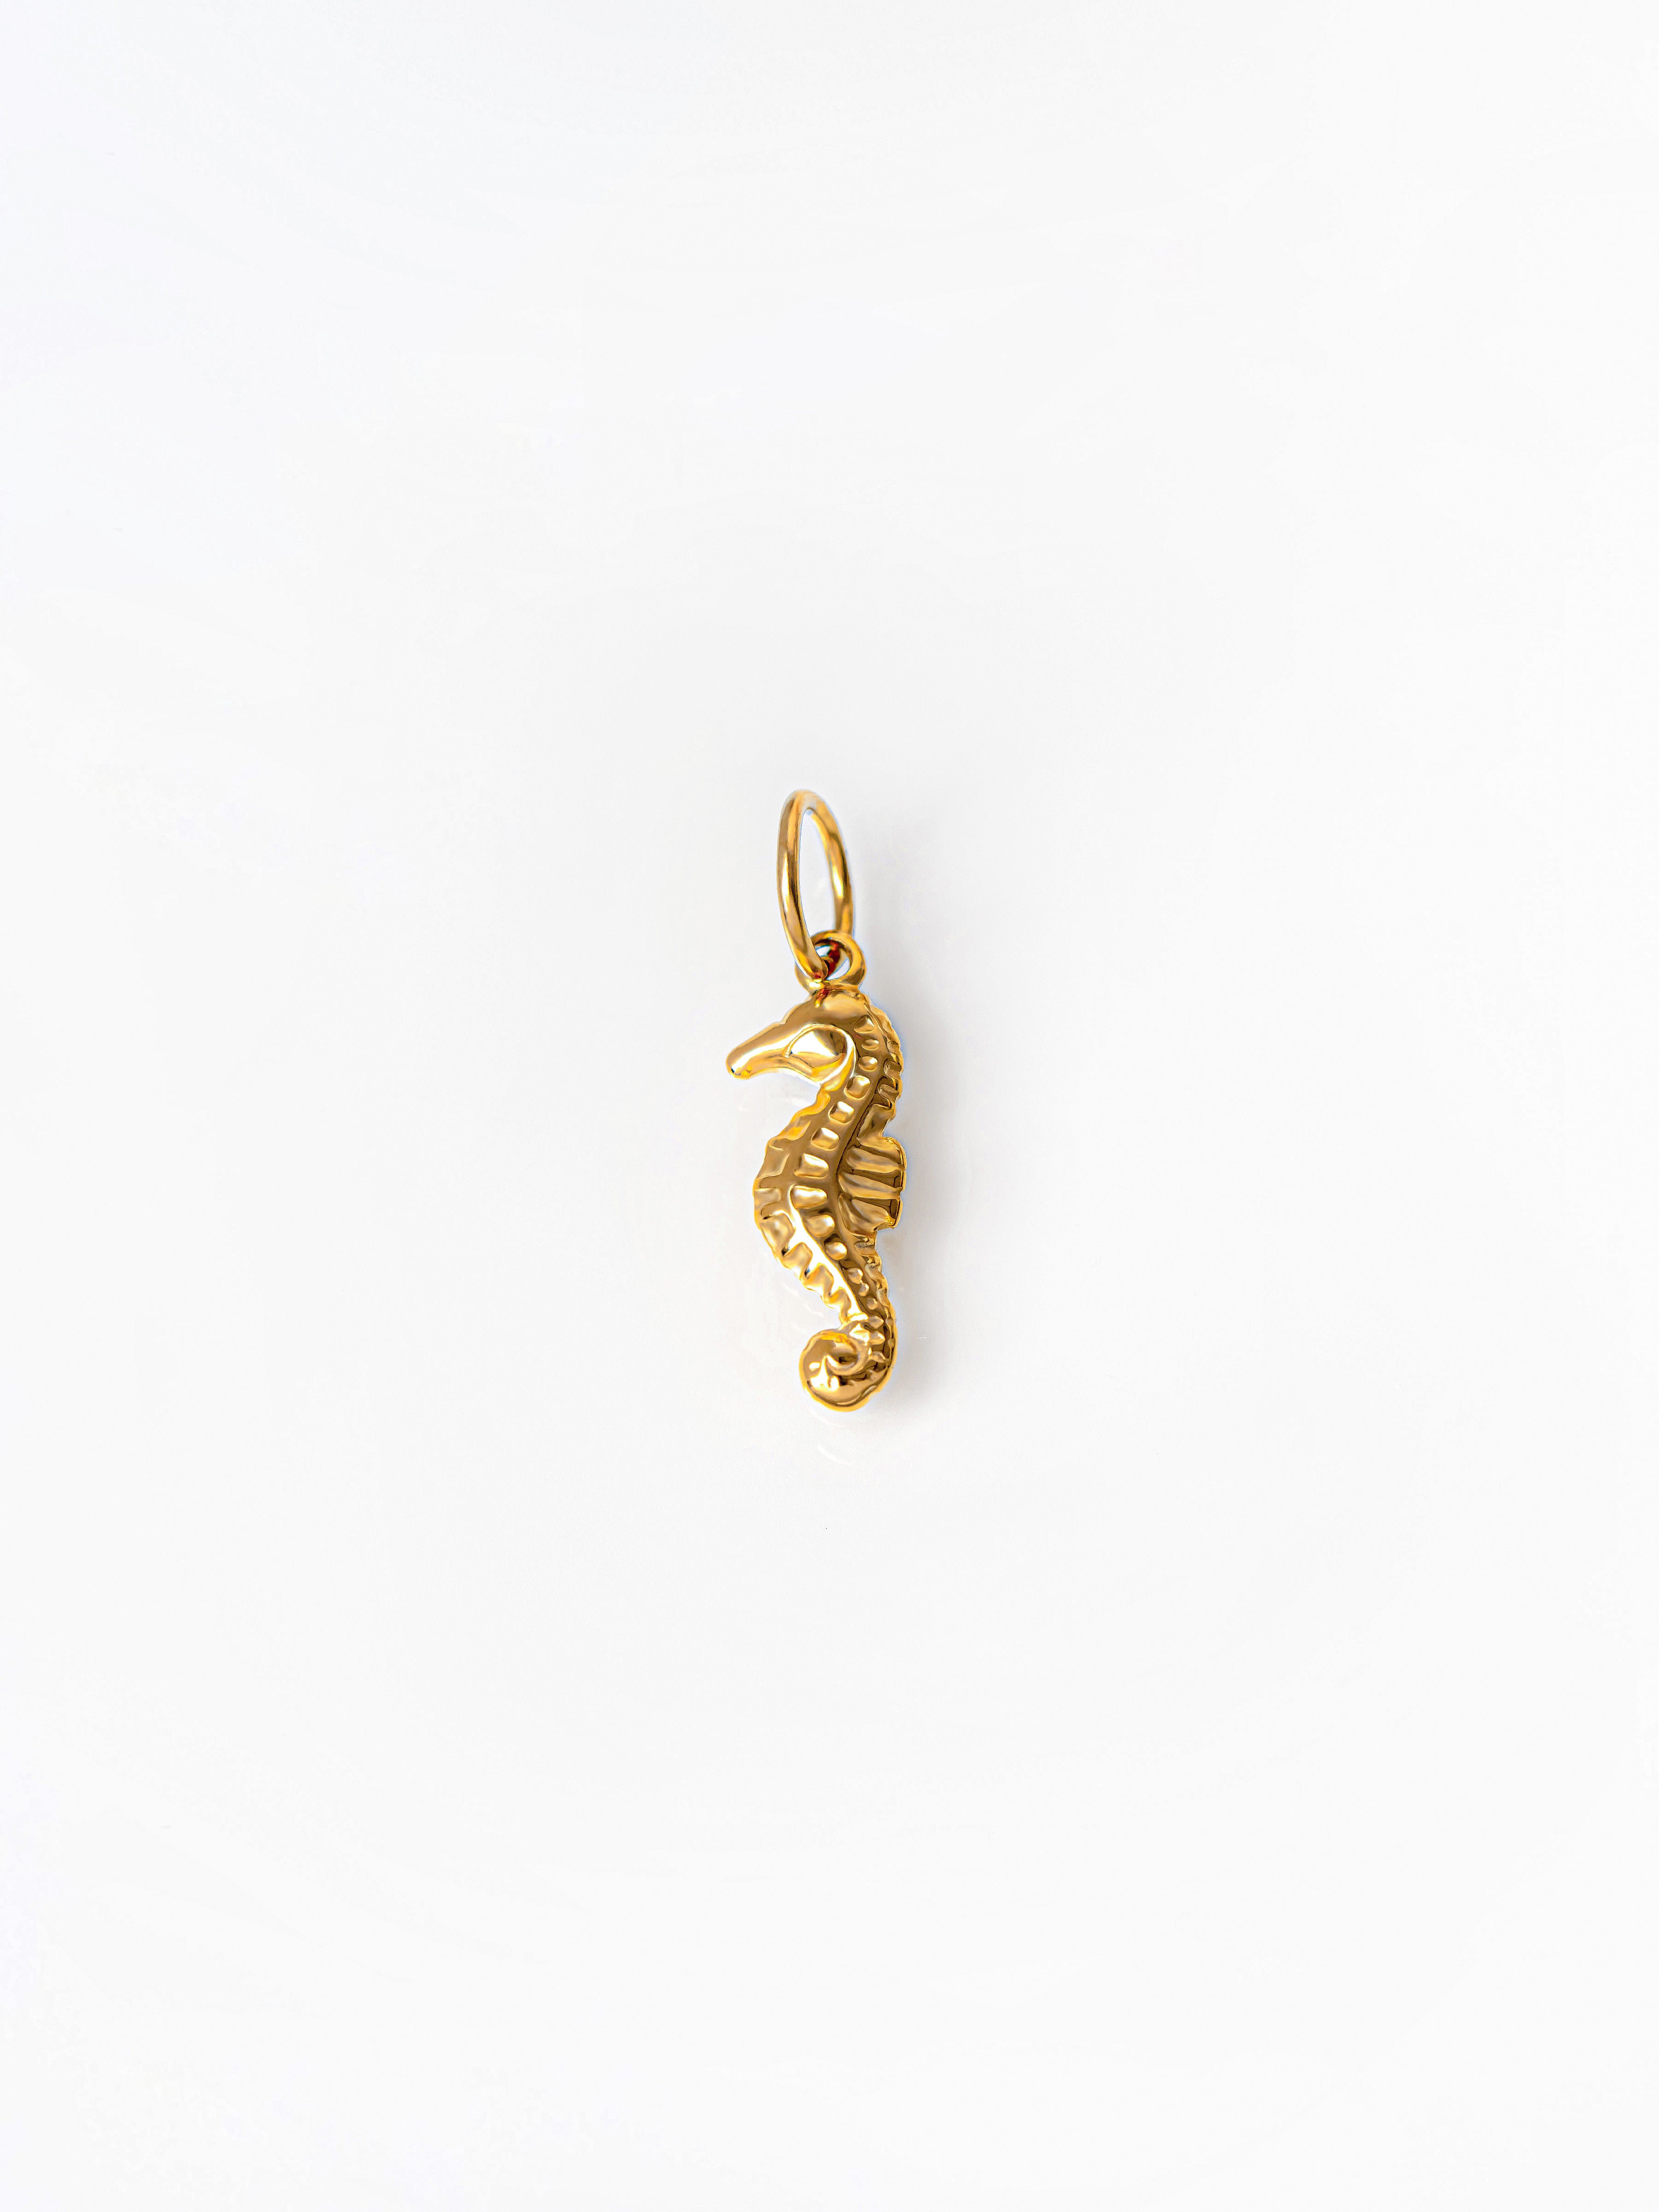 Gold Tiny Seahorse Pendant / Charm